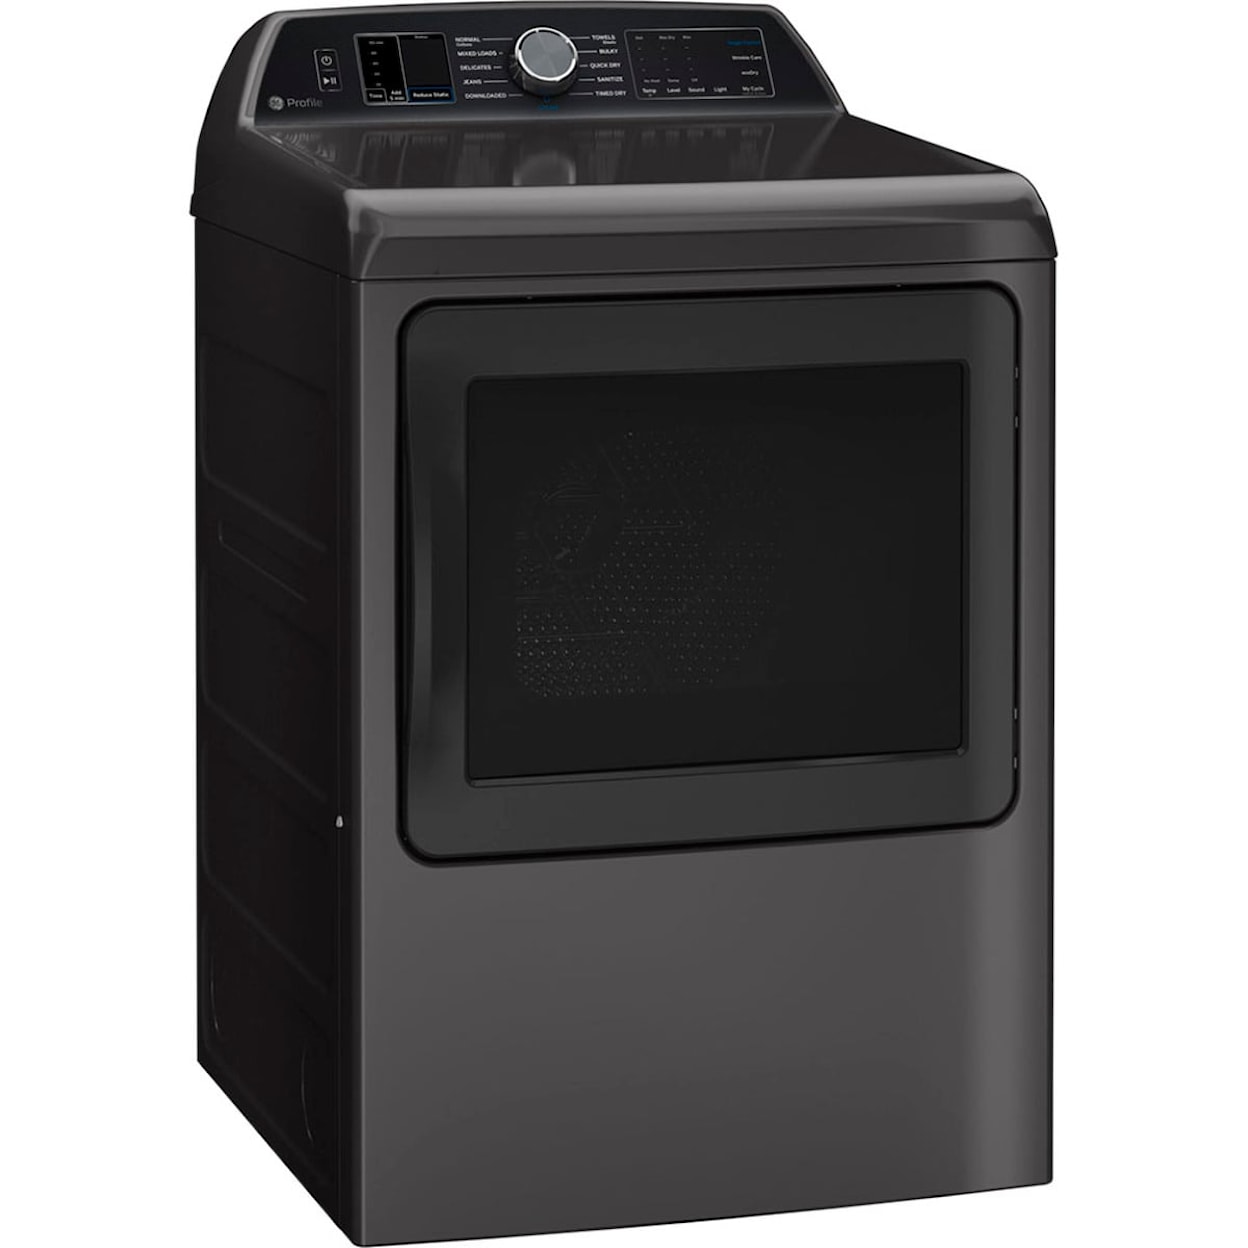 GE Appliances Dryers Smart Electric Dryer